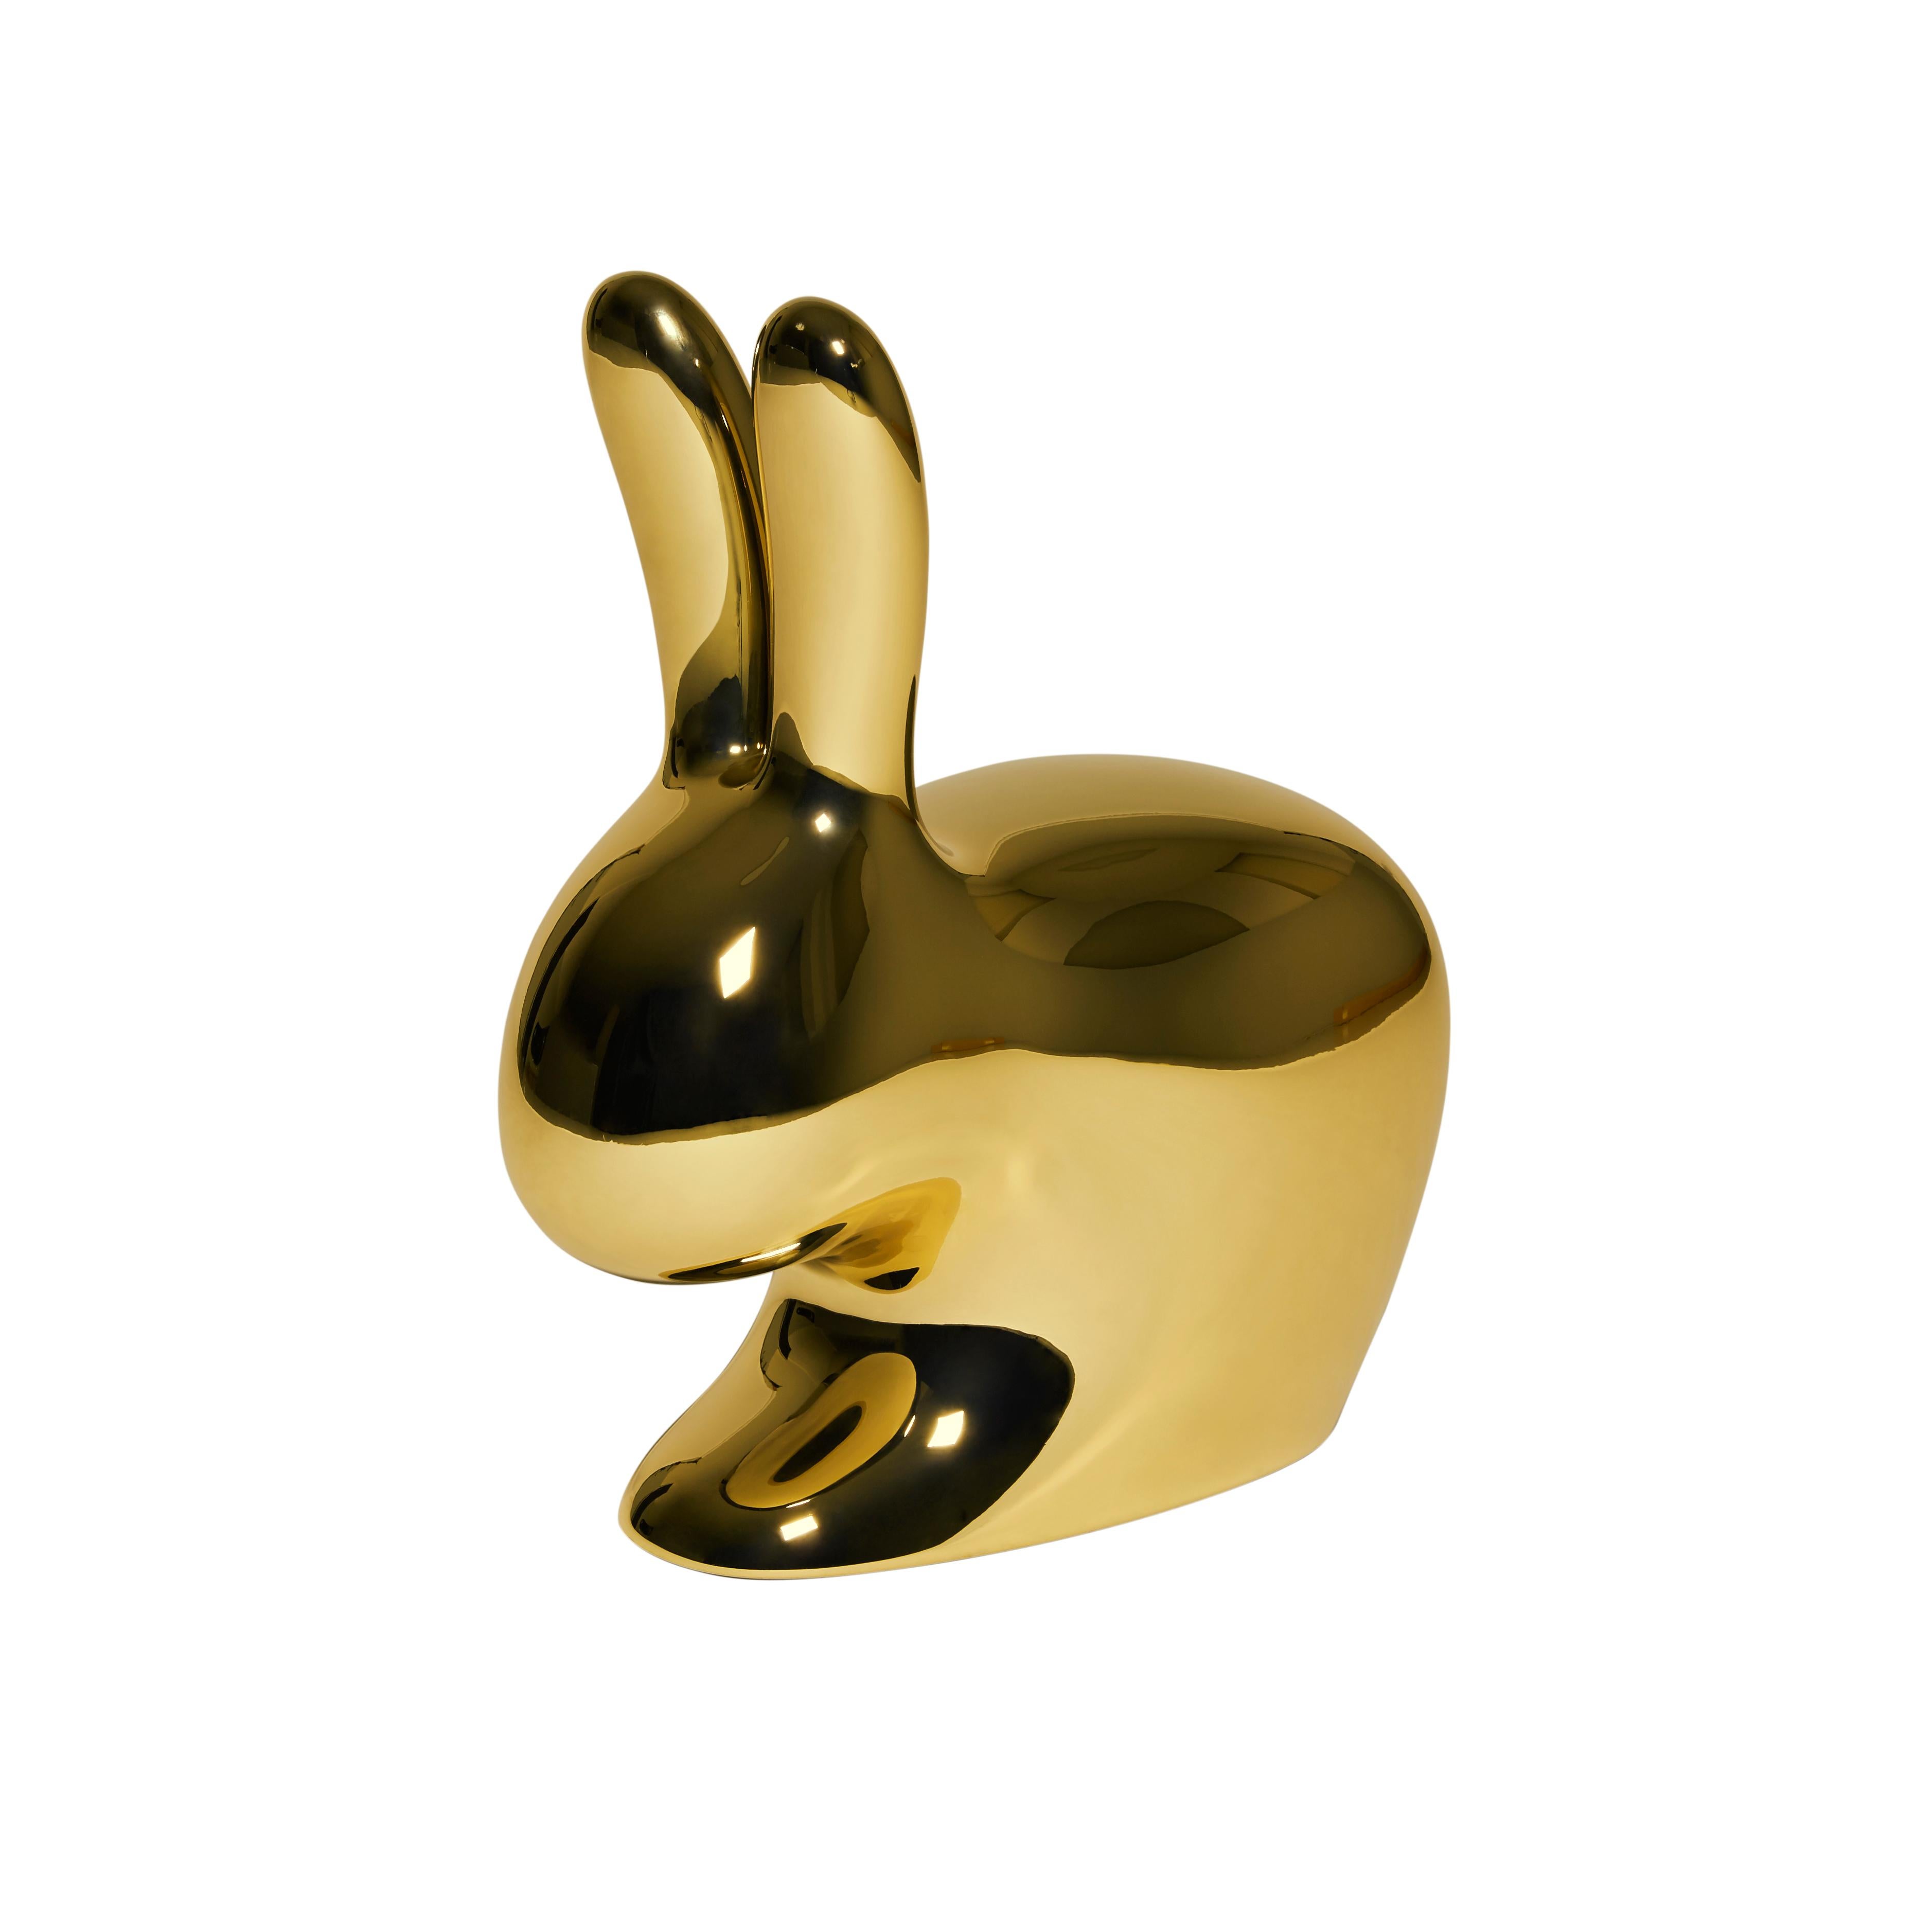 For Sale: Gold Modern Metal Finish Decorative Sculptural Rabbit Chair